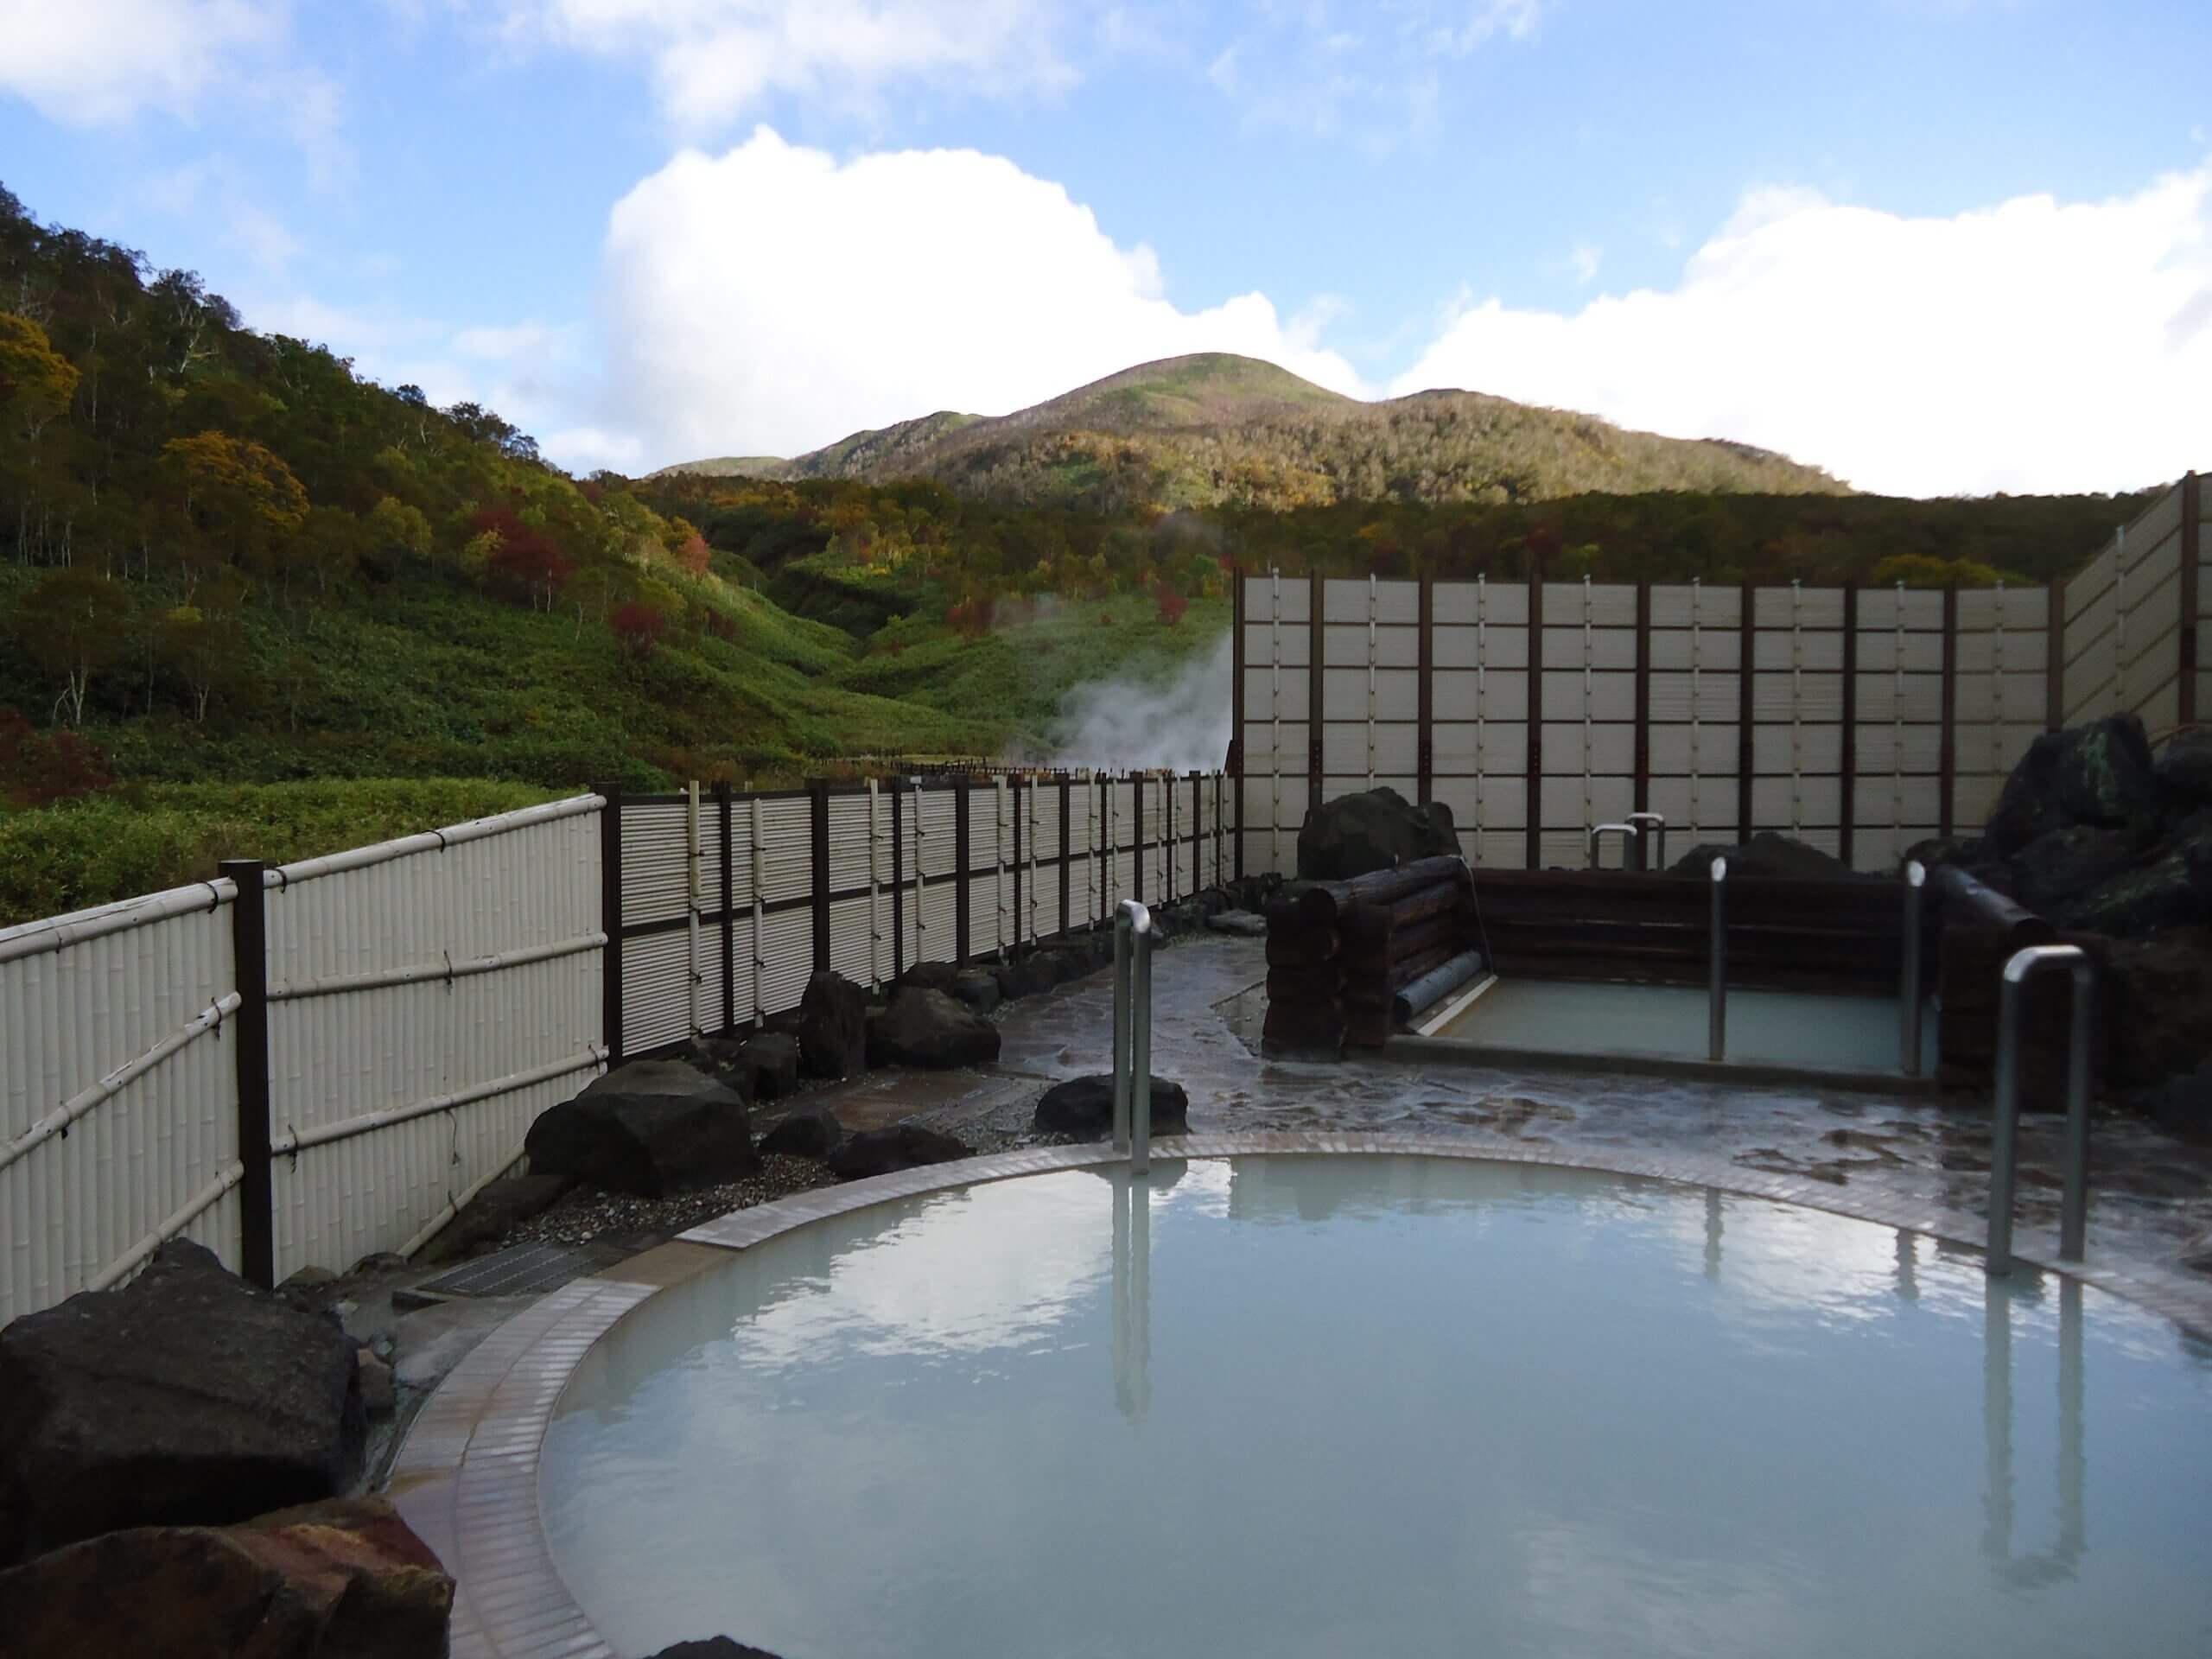 Yukichichibu Hot Springs: A Hidden Gem in the Mountains